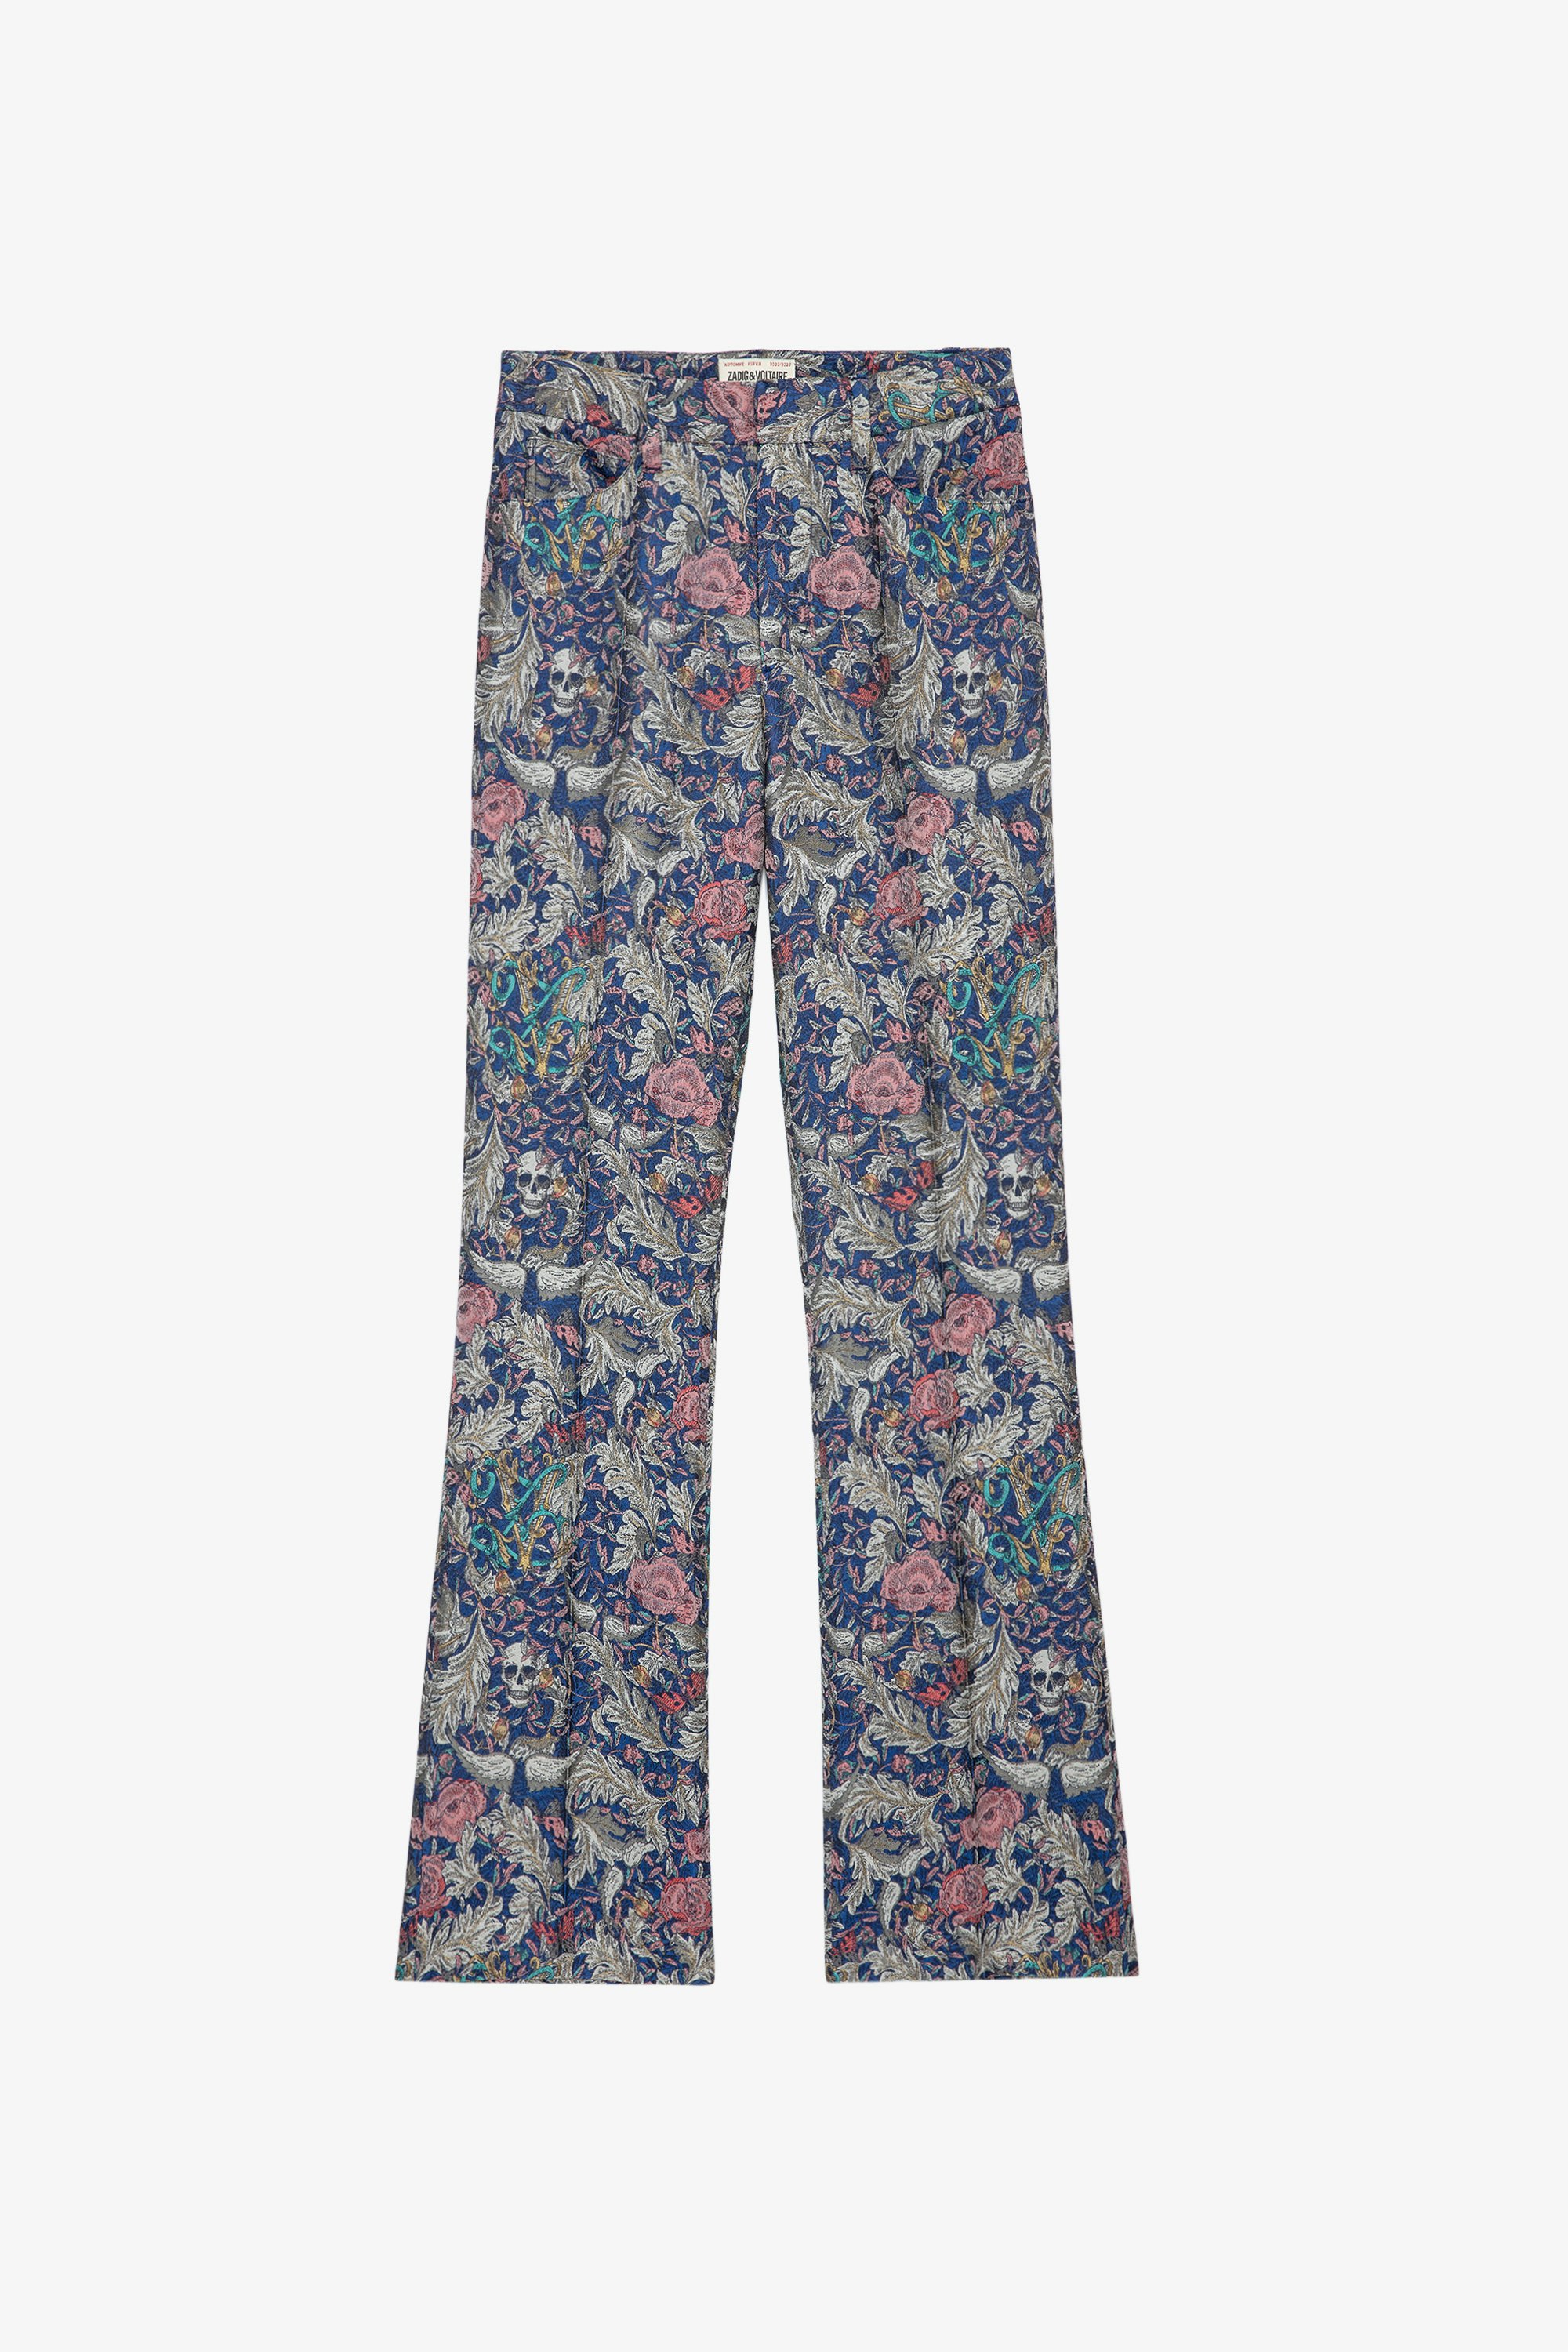 Pistol Jac Trousers Women's blue jacquard trousers with floral motifs 